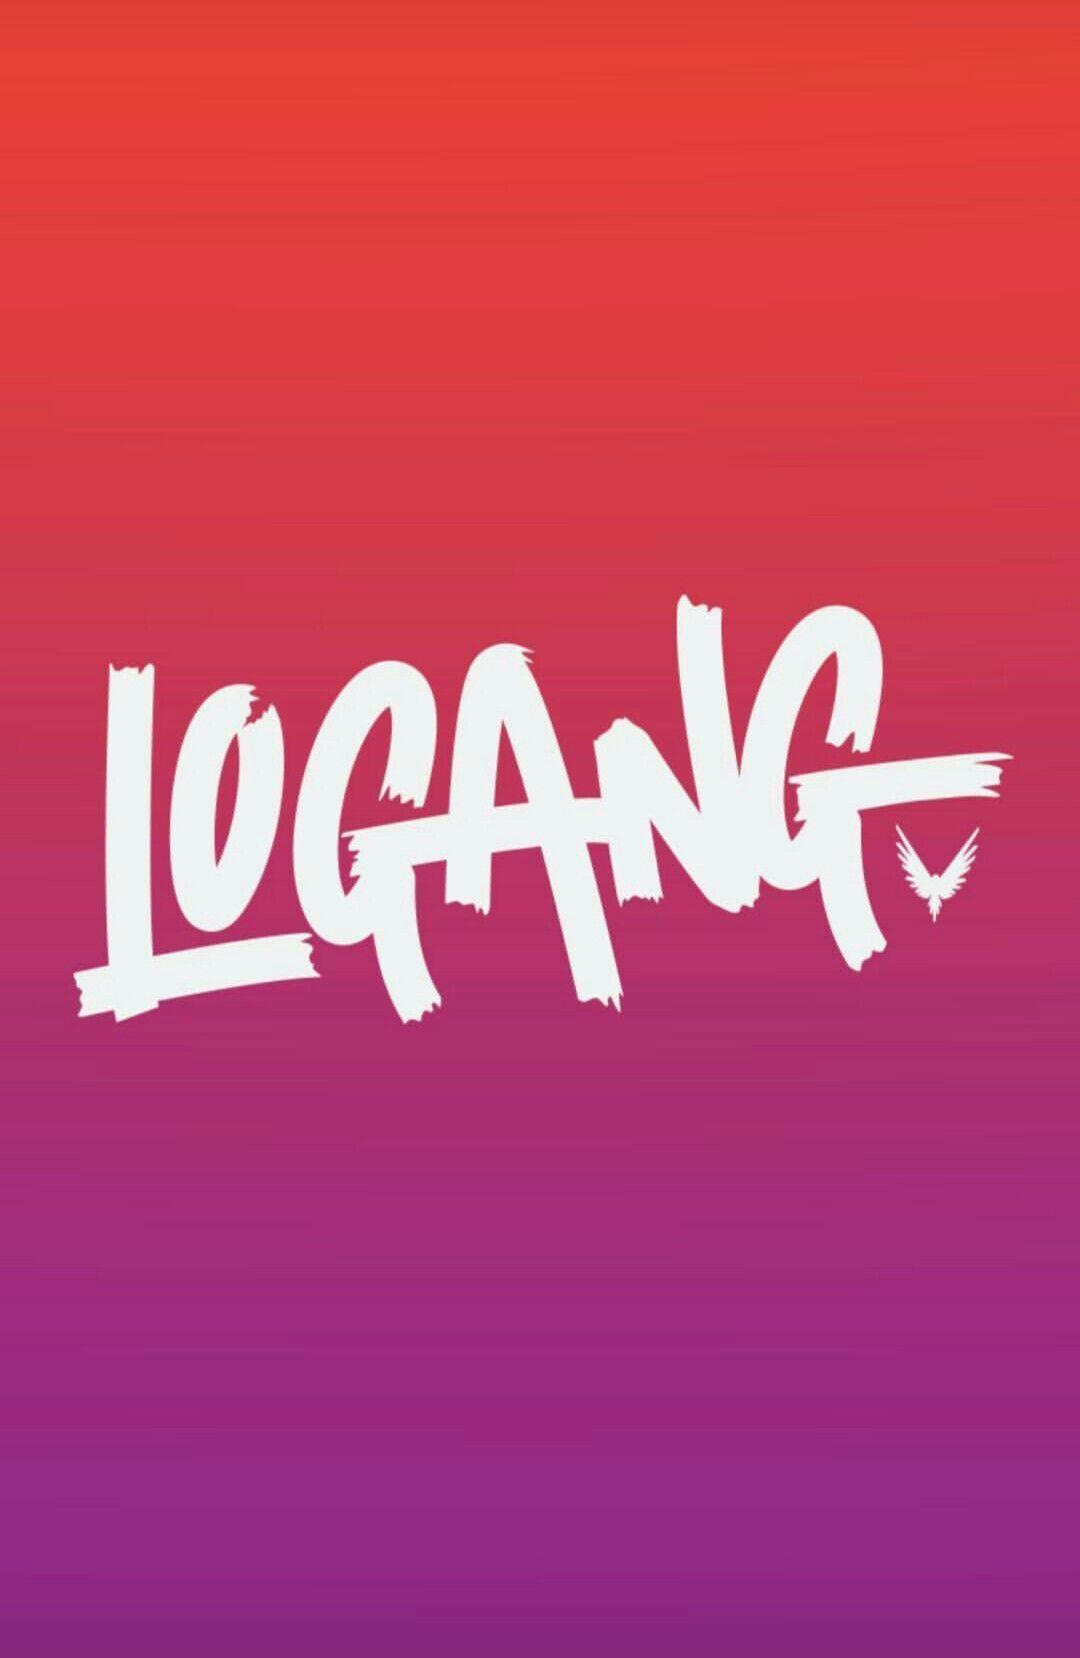 Calling all the logang #Screensaver #loganpaul. Logang. Random